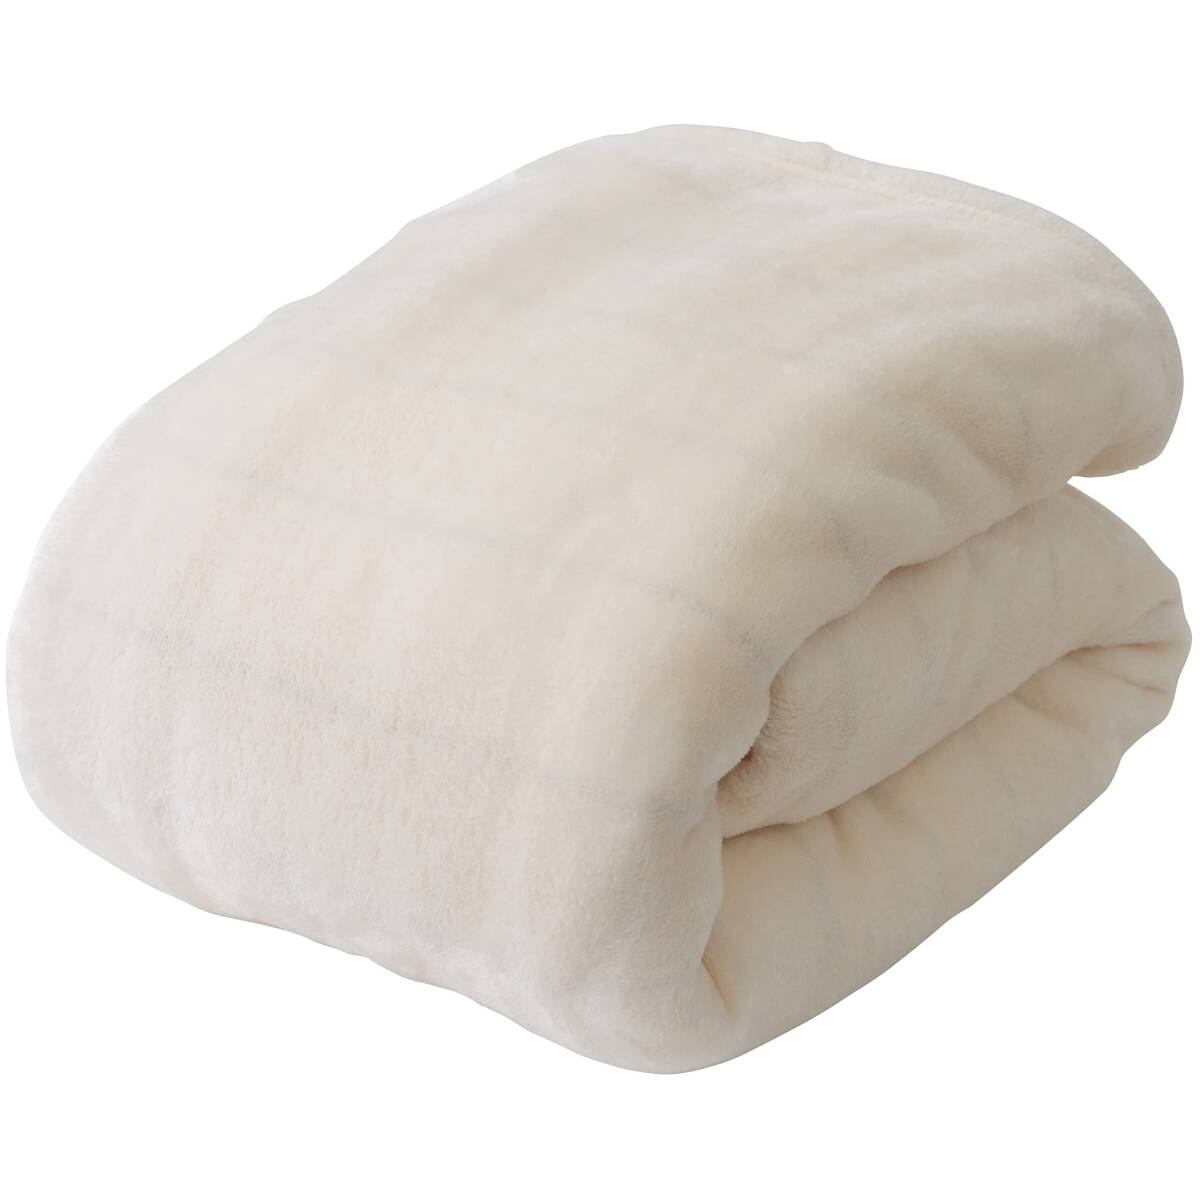  aqua (AQUA) mofua blanket semi-double winter blanket mofa microfibre ivory warm ..........